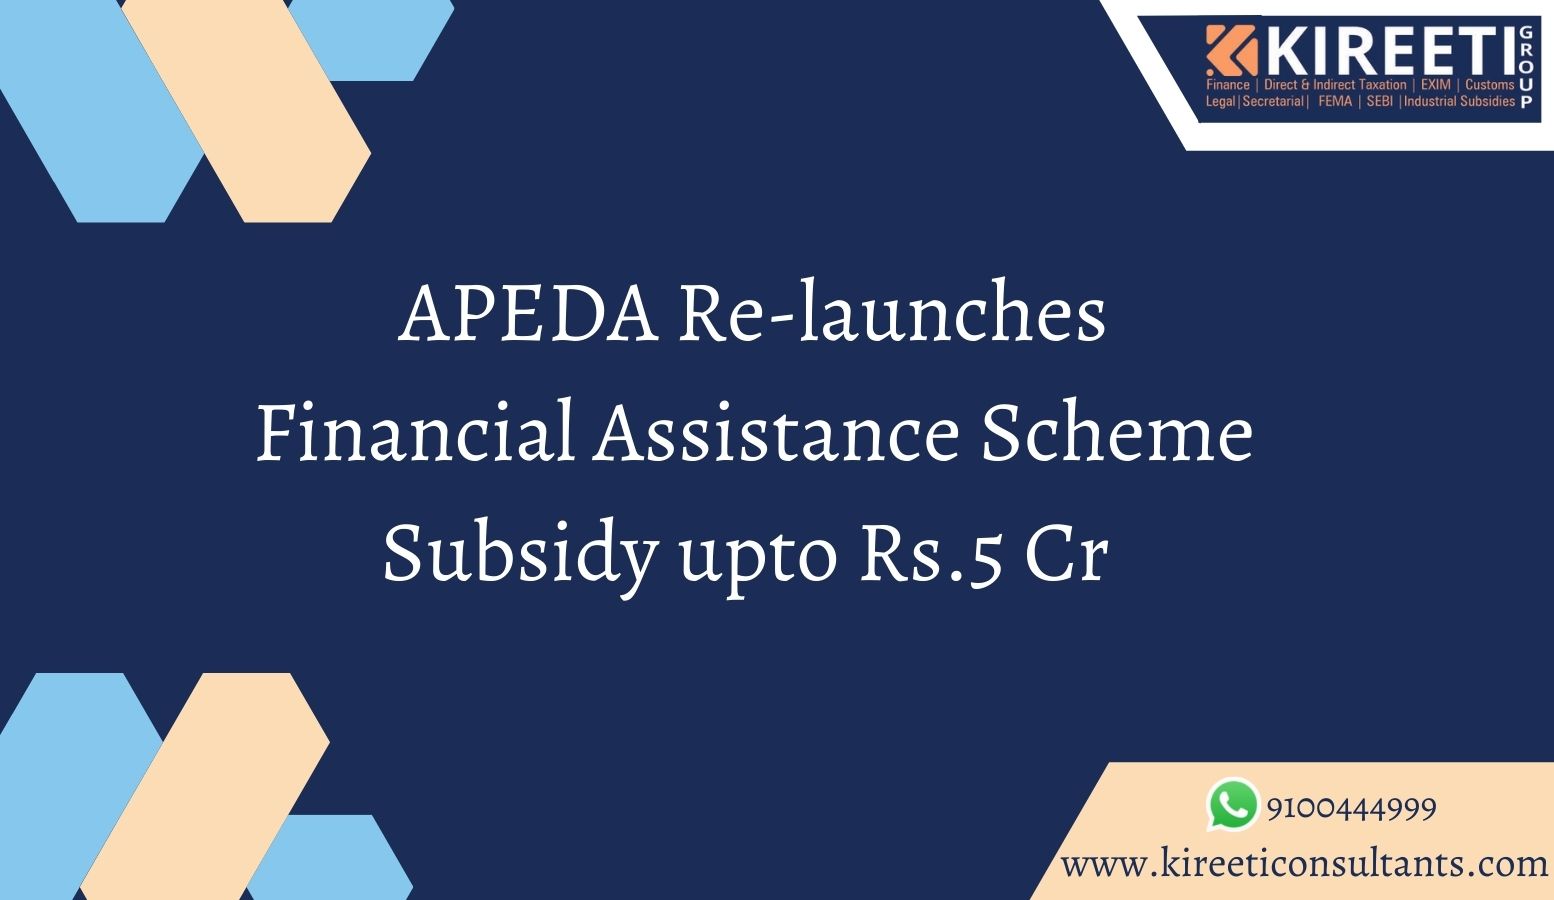 apeda, kireeticonsultants, 15finance, Operational Guidelines, APEDA New Scheme